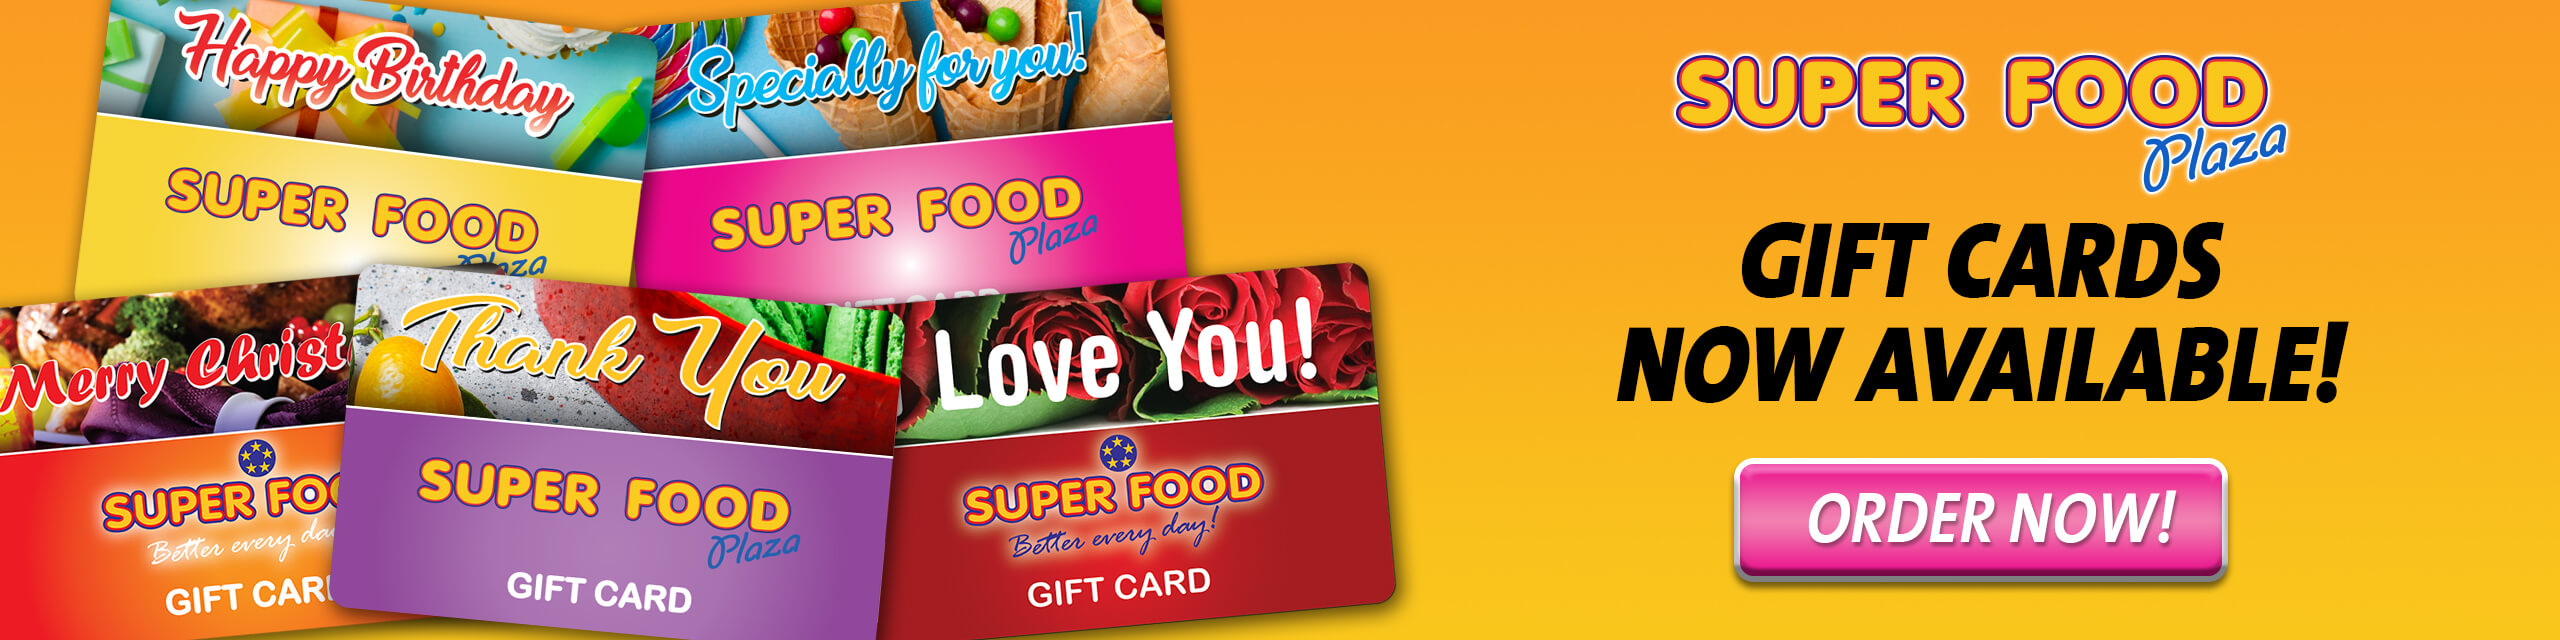 Super_Food_Gift_card